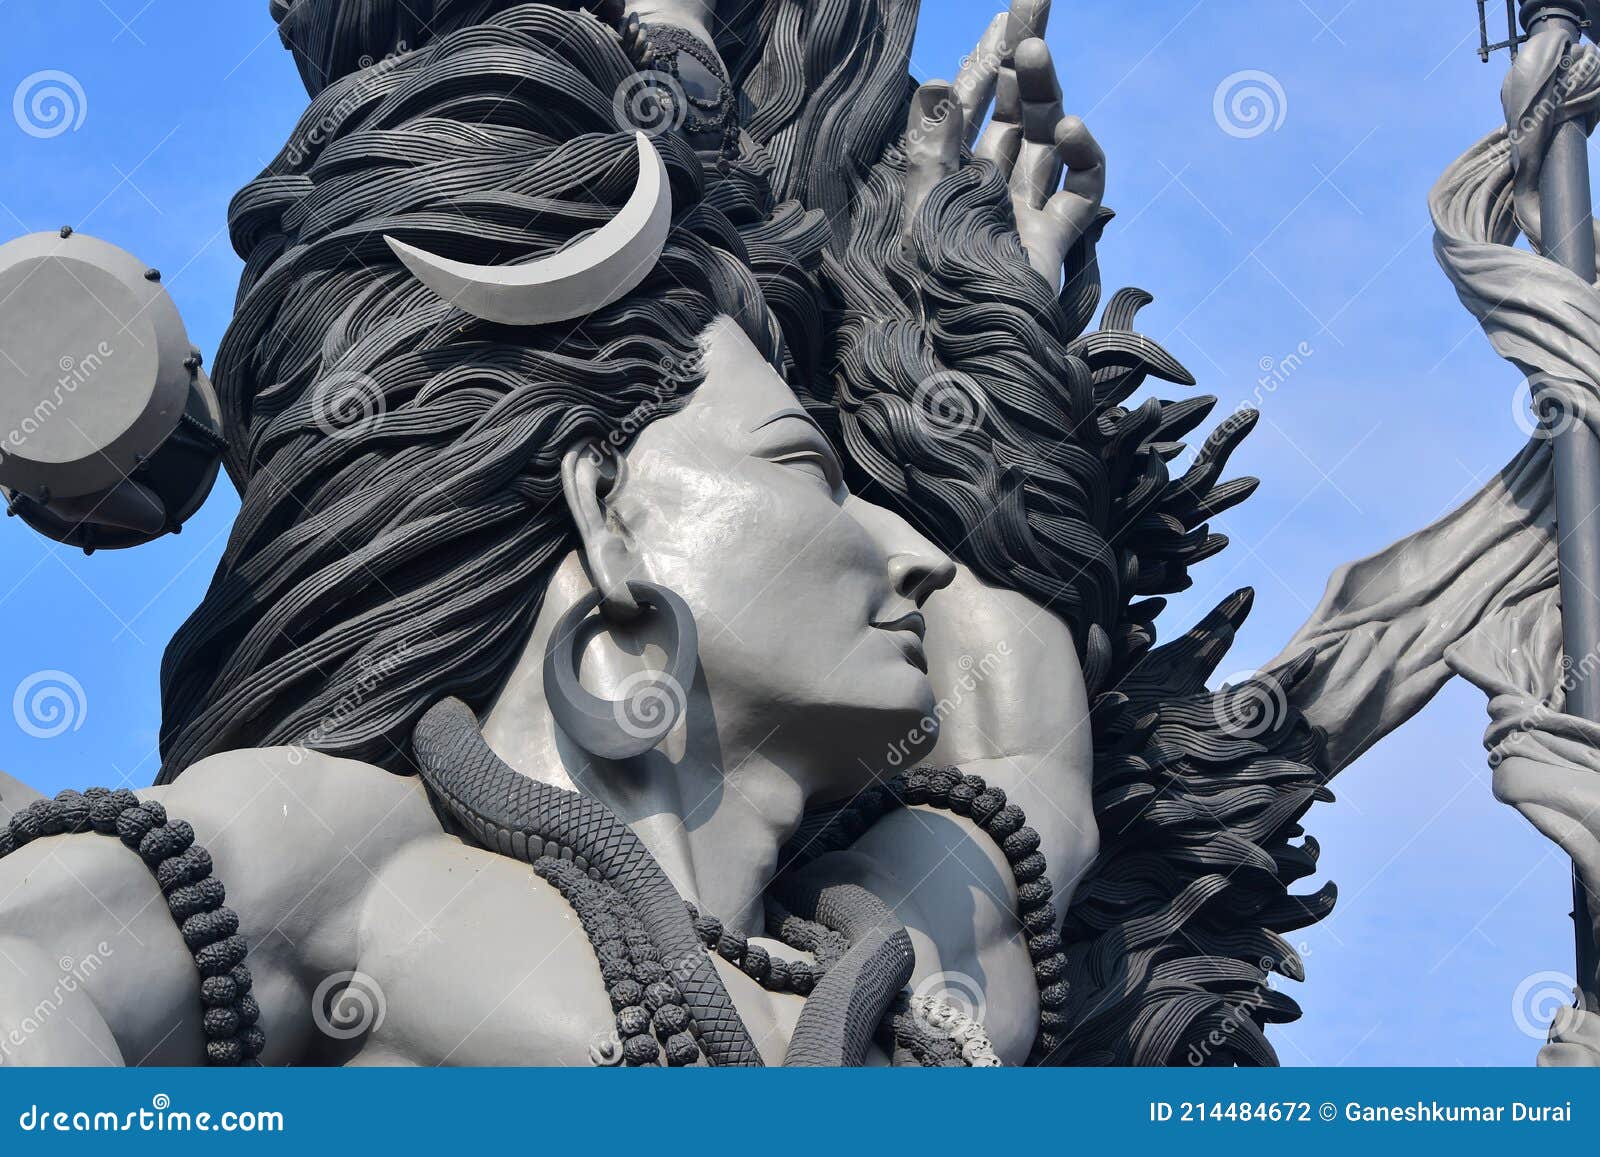 Lord Siva Statue in Azhimala Siva Temple Editorial Photography ...